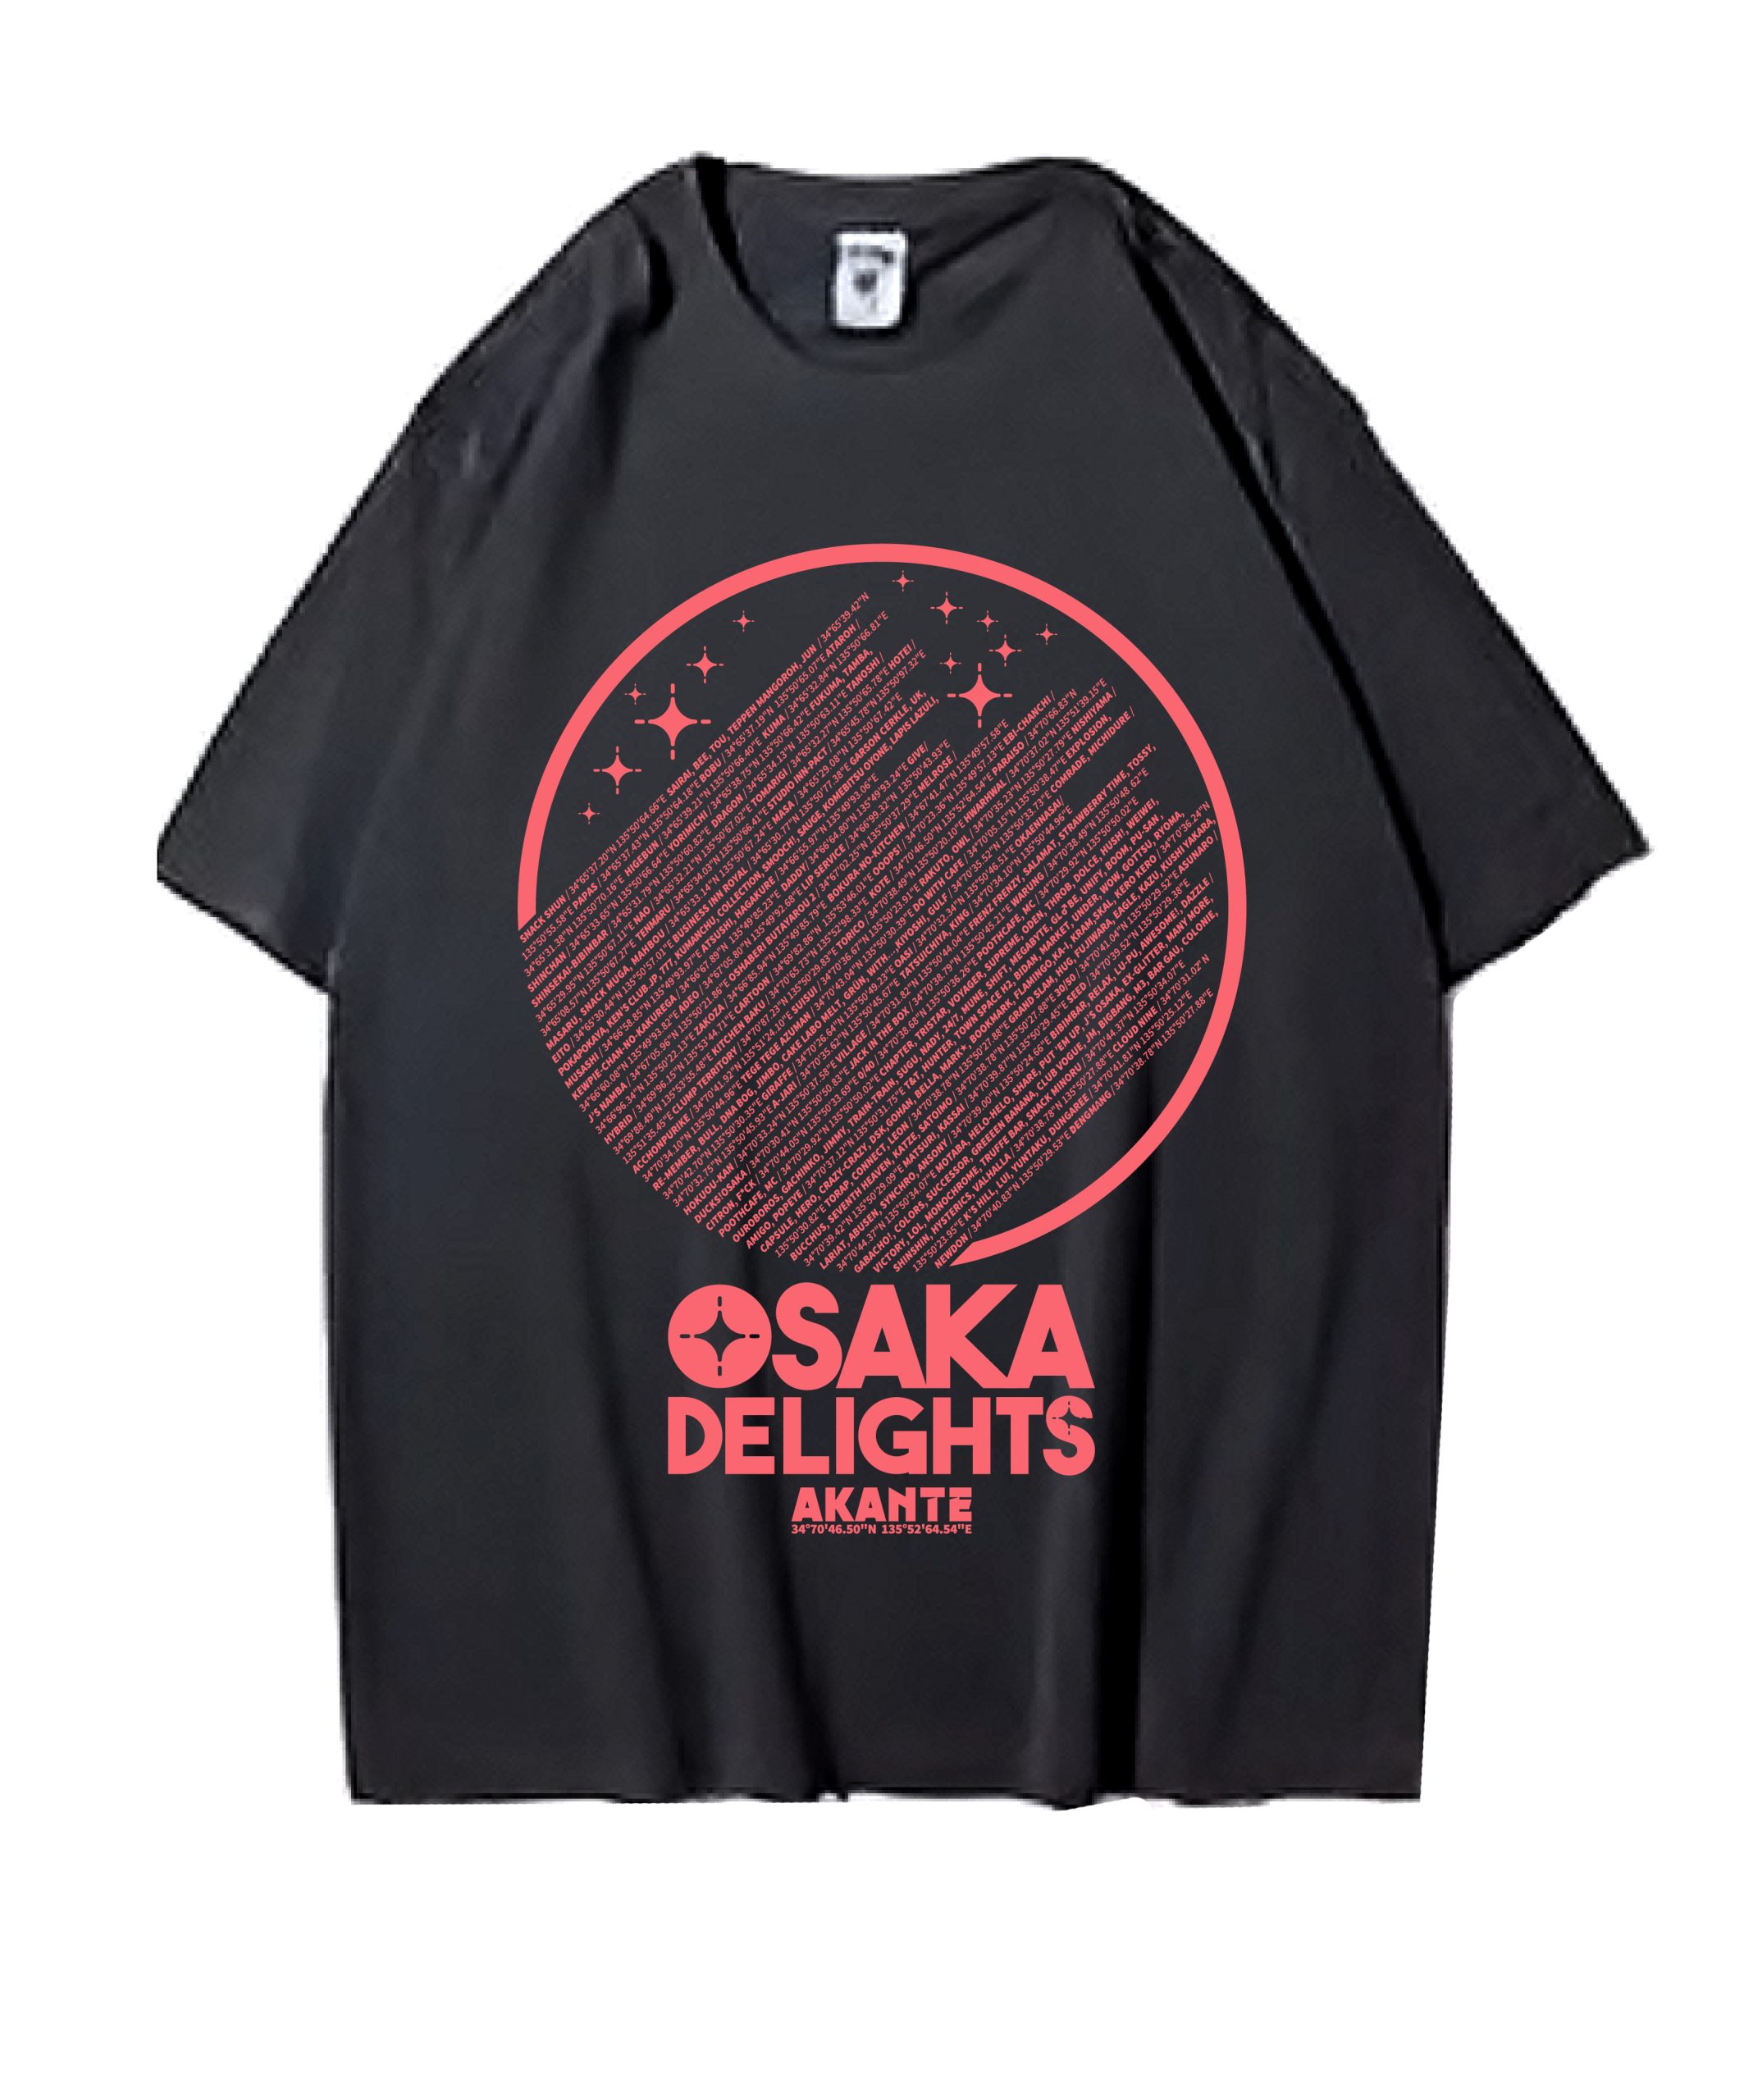 OSAKA DELIGHTS Tシャツ グレーxピンク